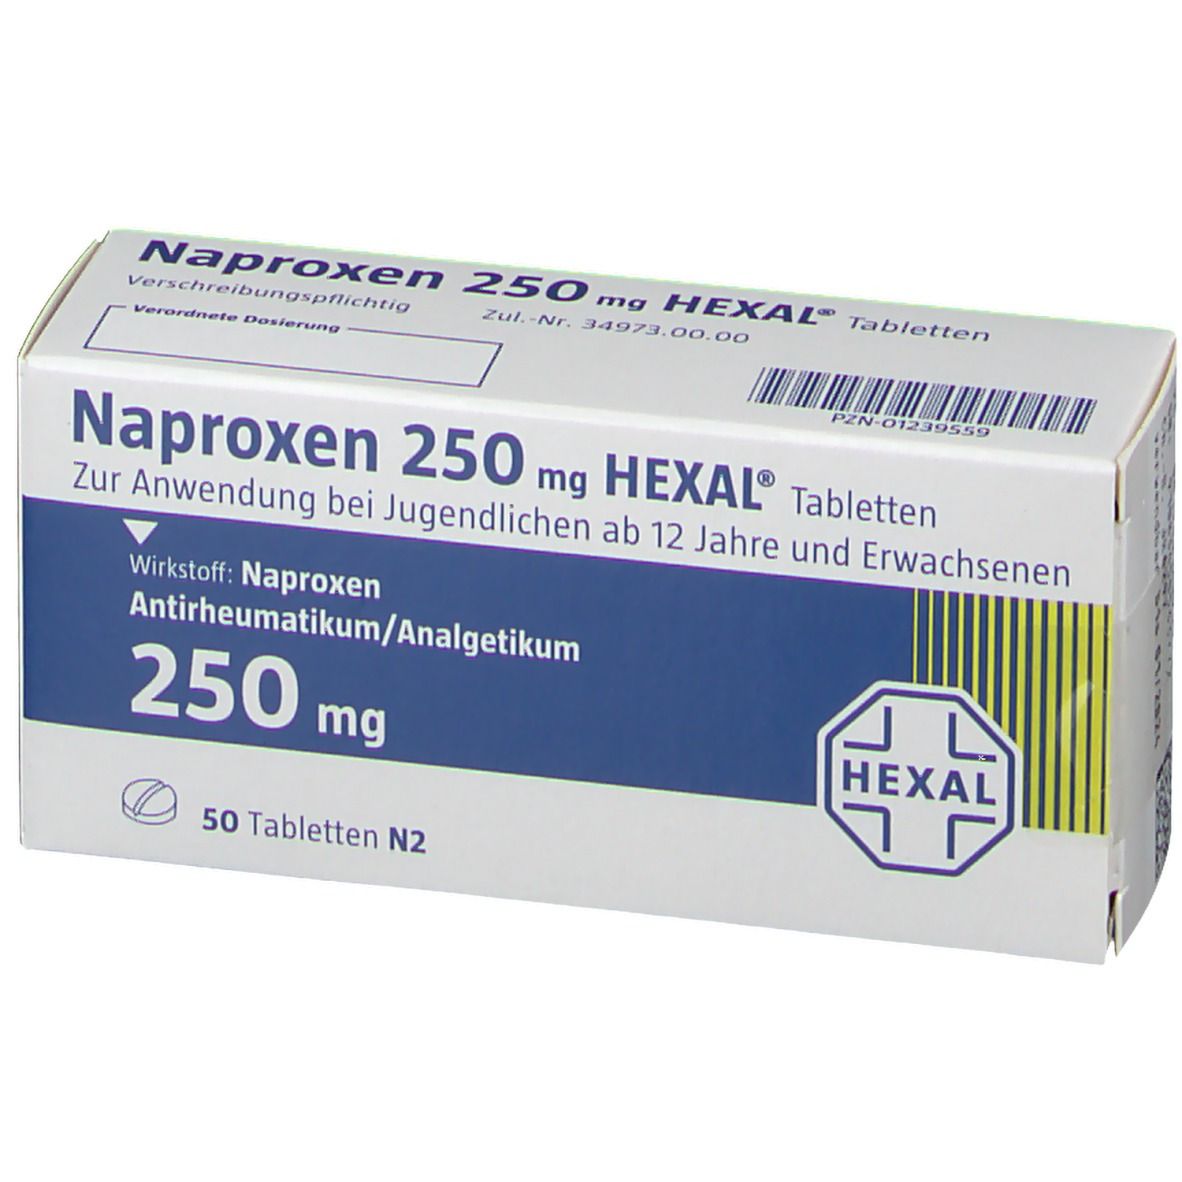 Naproxen 250 Mg Hexal® 50 St Mit Dem E Rezept Kaufen Shop Apotheke